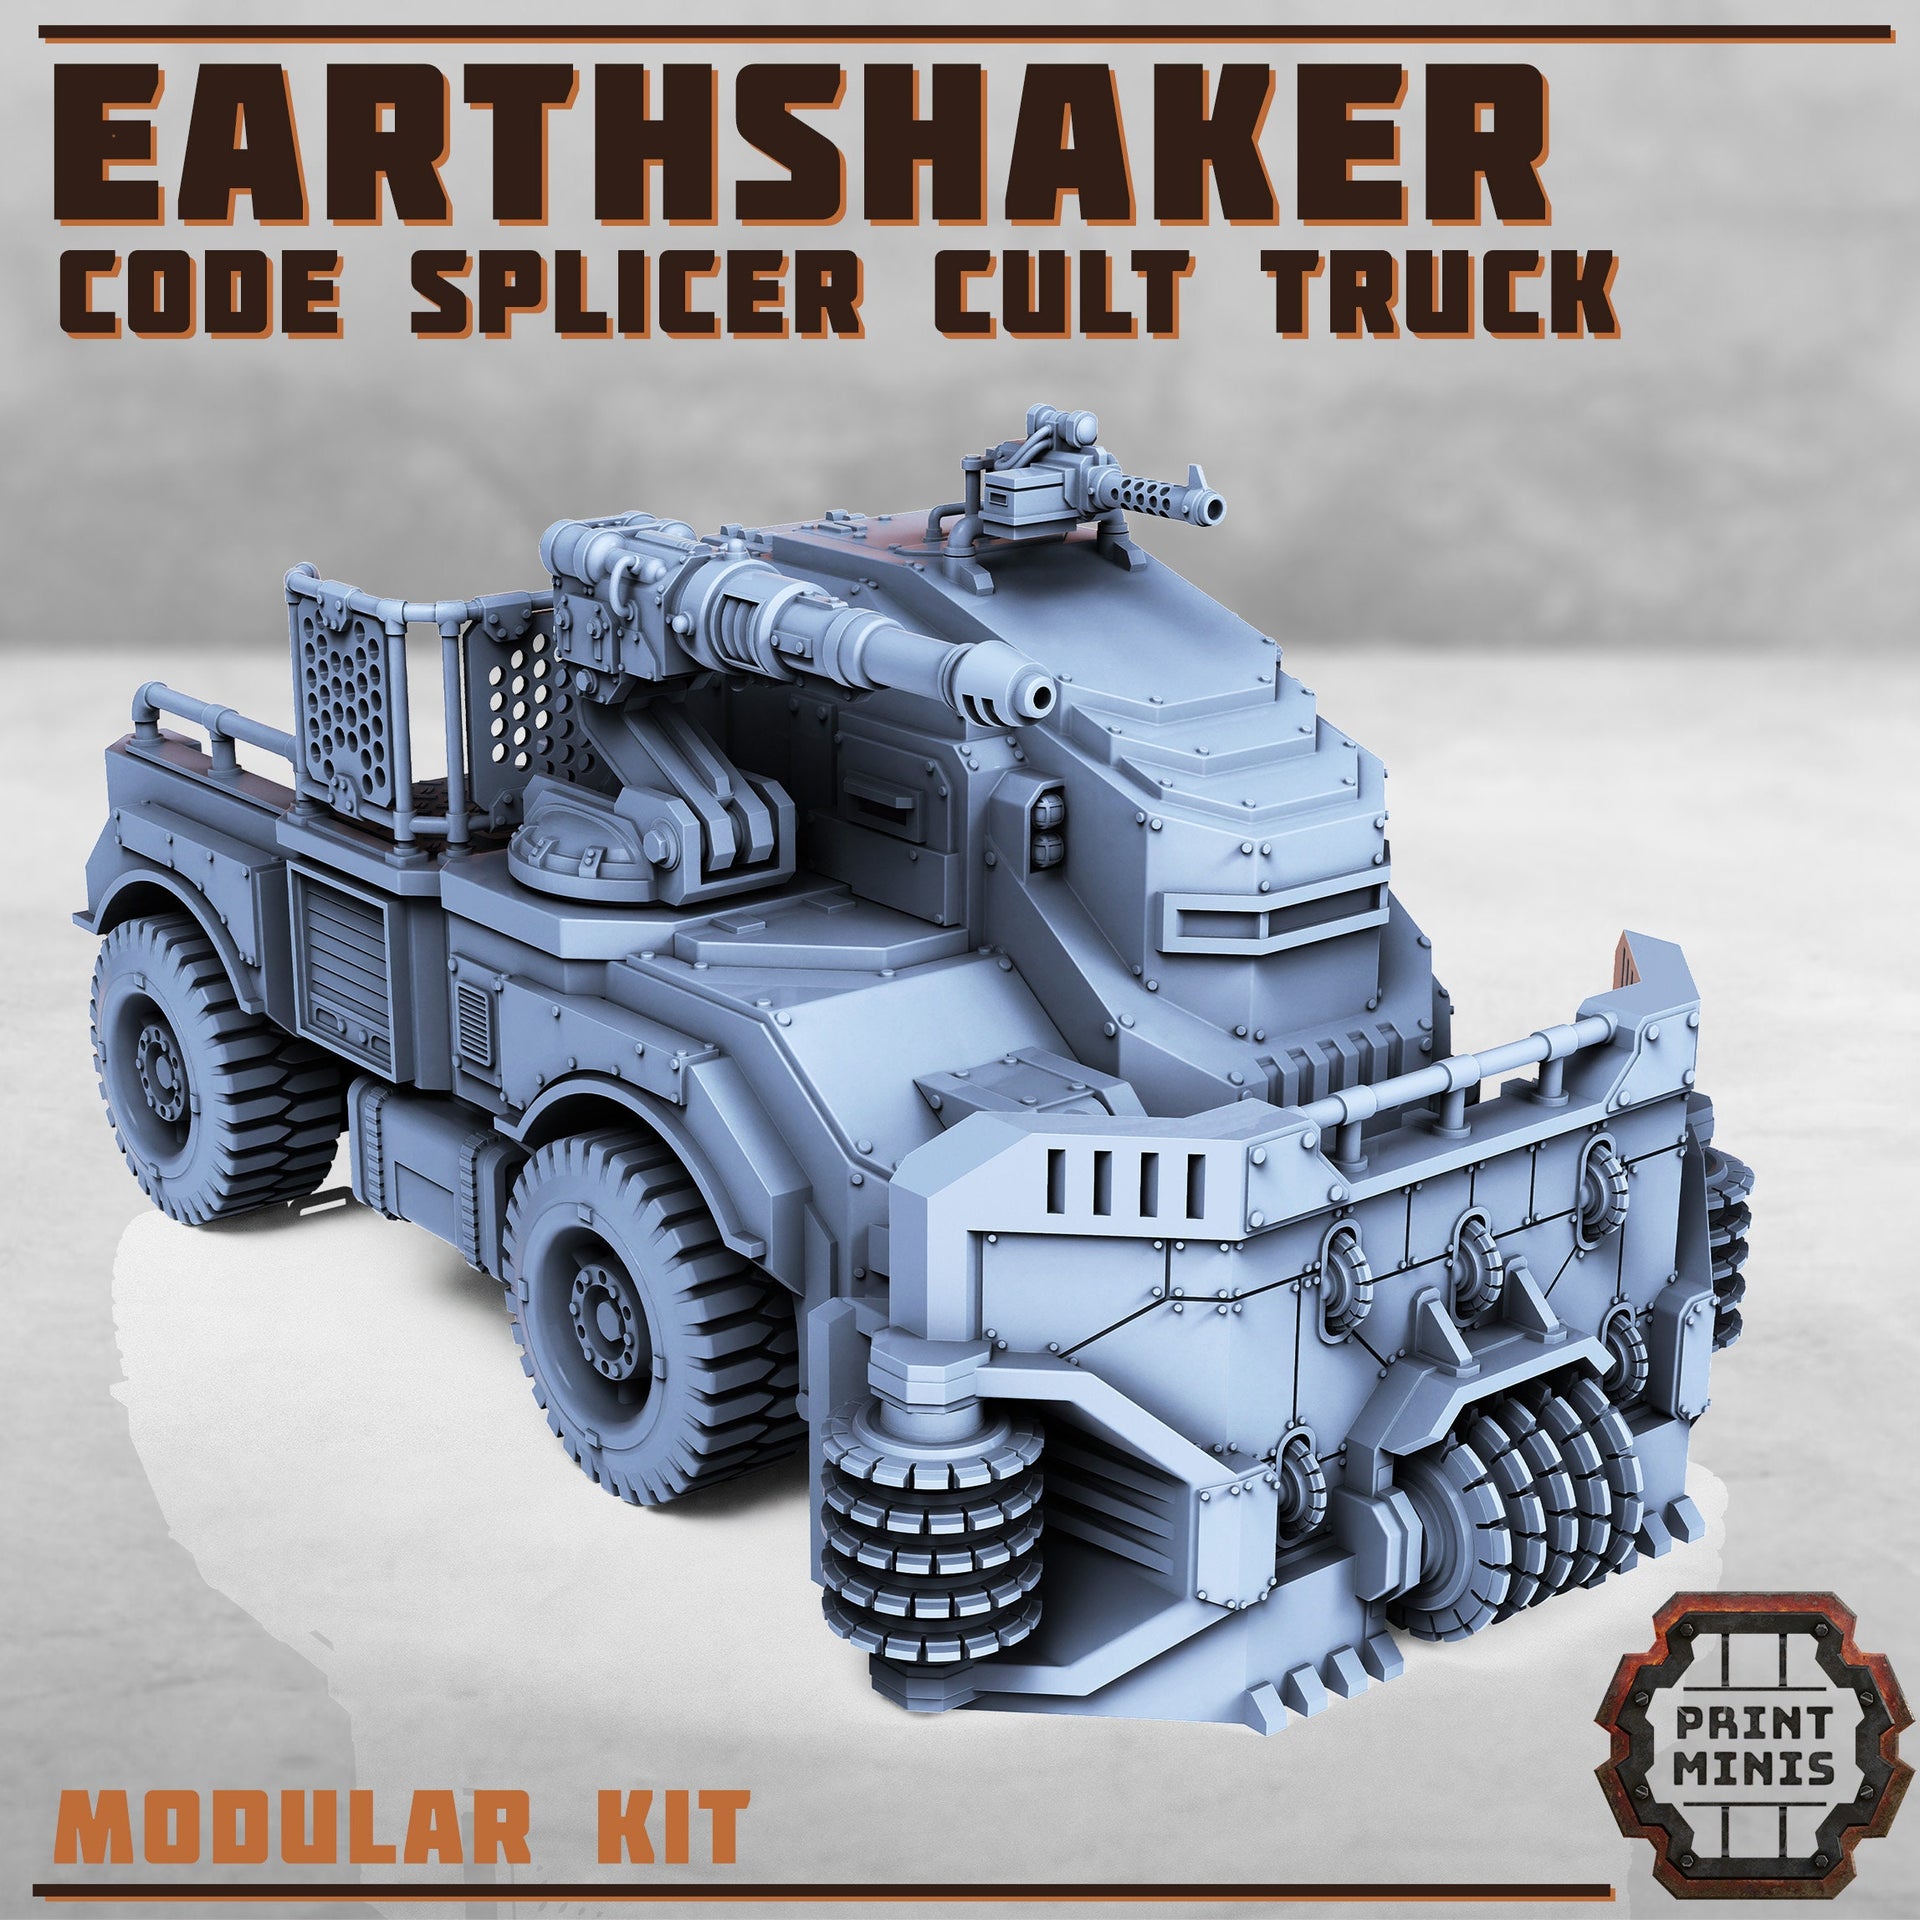 Earthshaker Truck, - Print Minis | Sci Fi | Tank | Crawler | Codesplicer Cult | Cultist | Mining